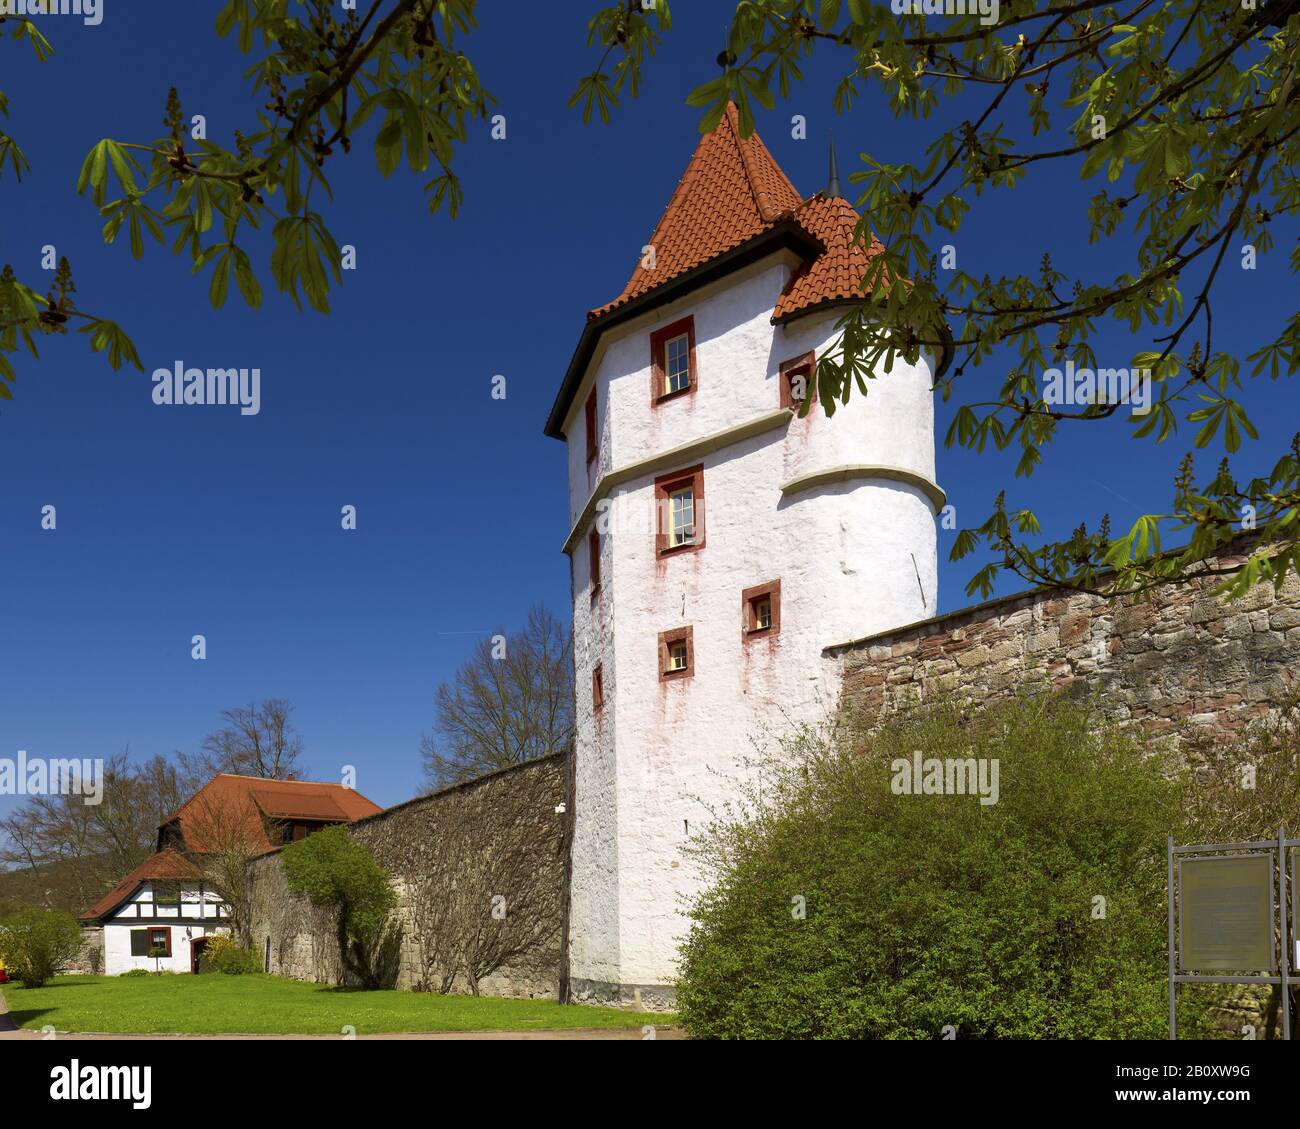 Gardener's house and Zwingerturm from Wilhelmsburg Castle in Schmalkalden, Thuringia, Germany, Stock Photo